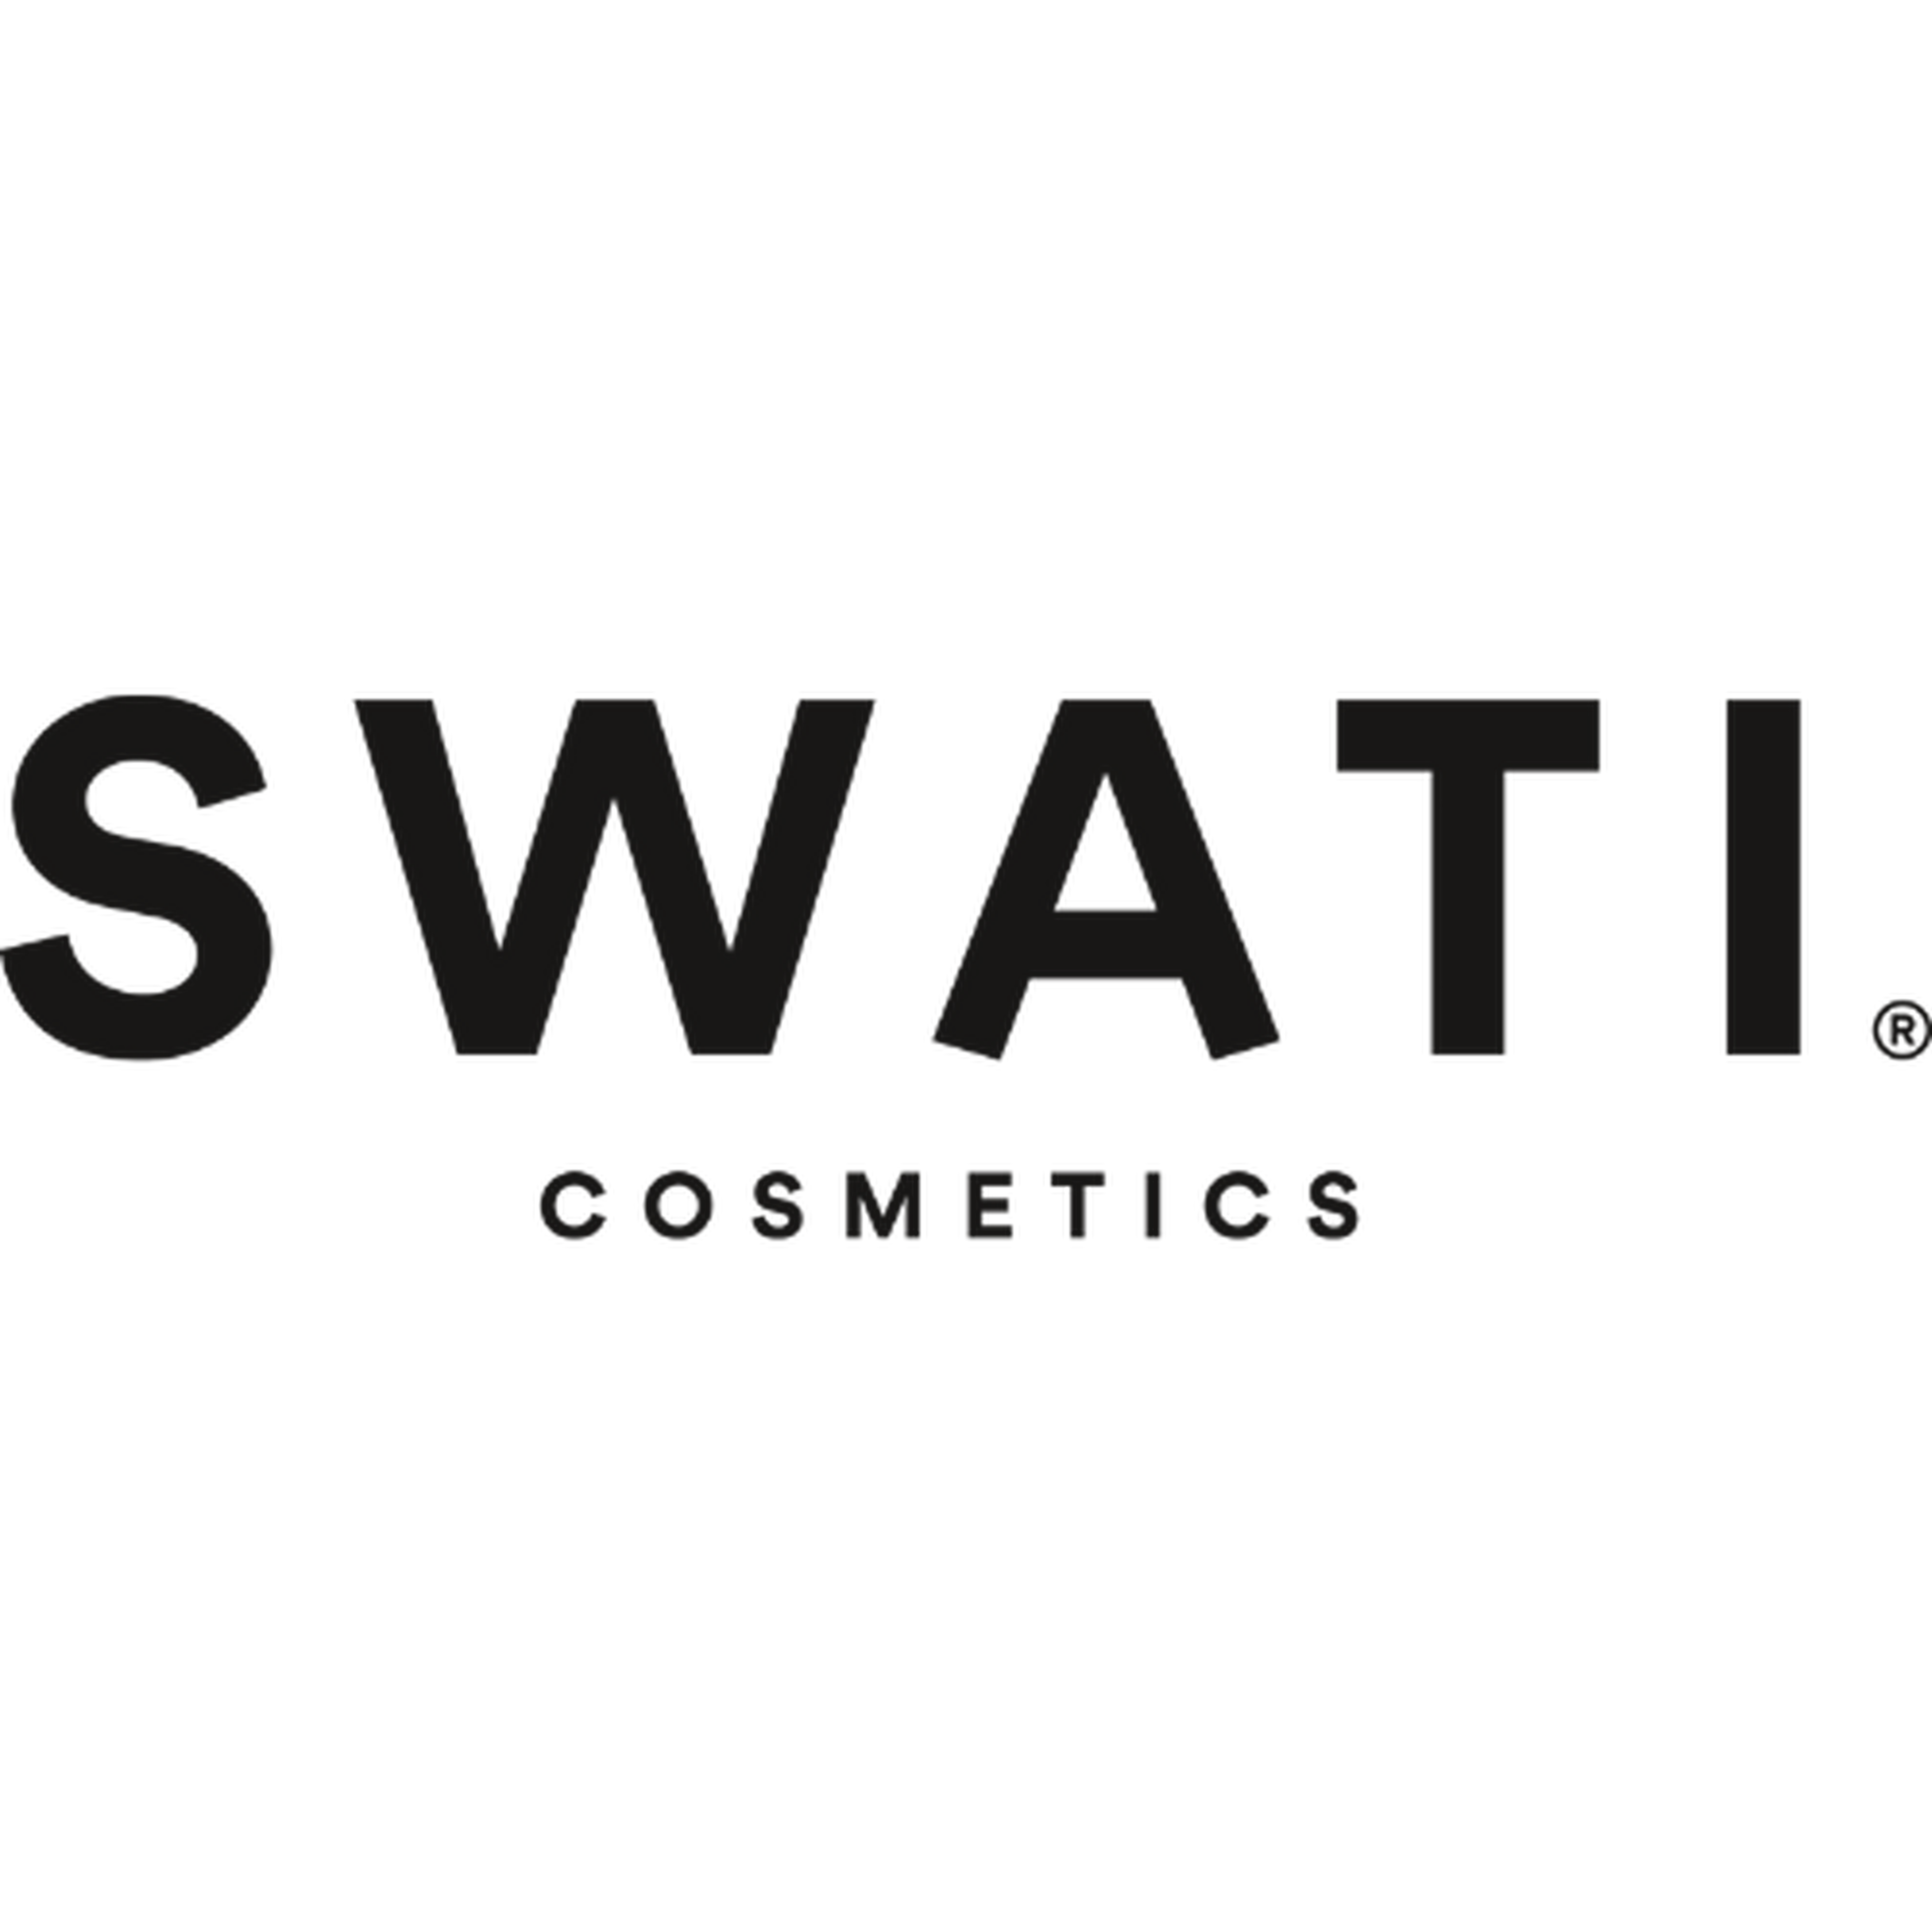 SWATI Cosmetics logotype